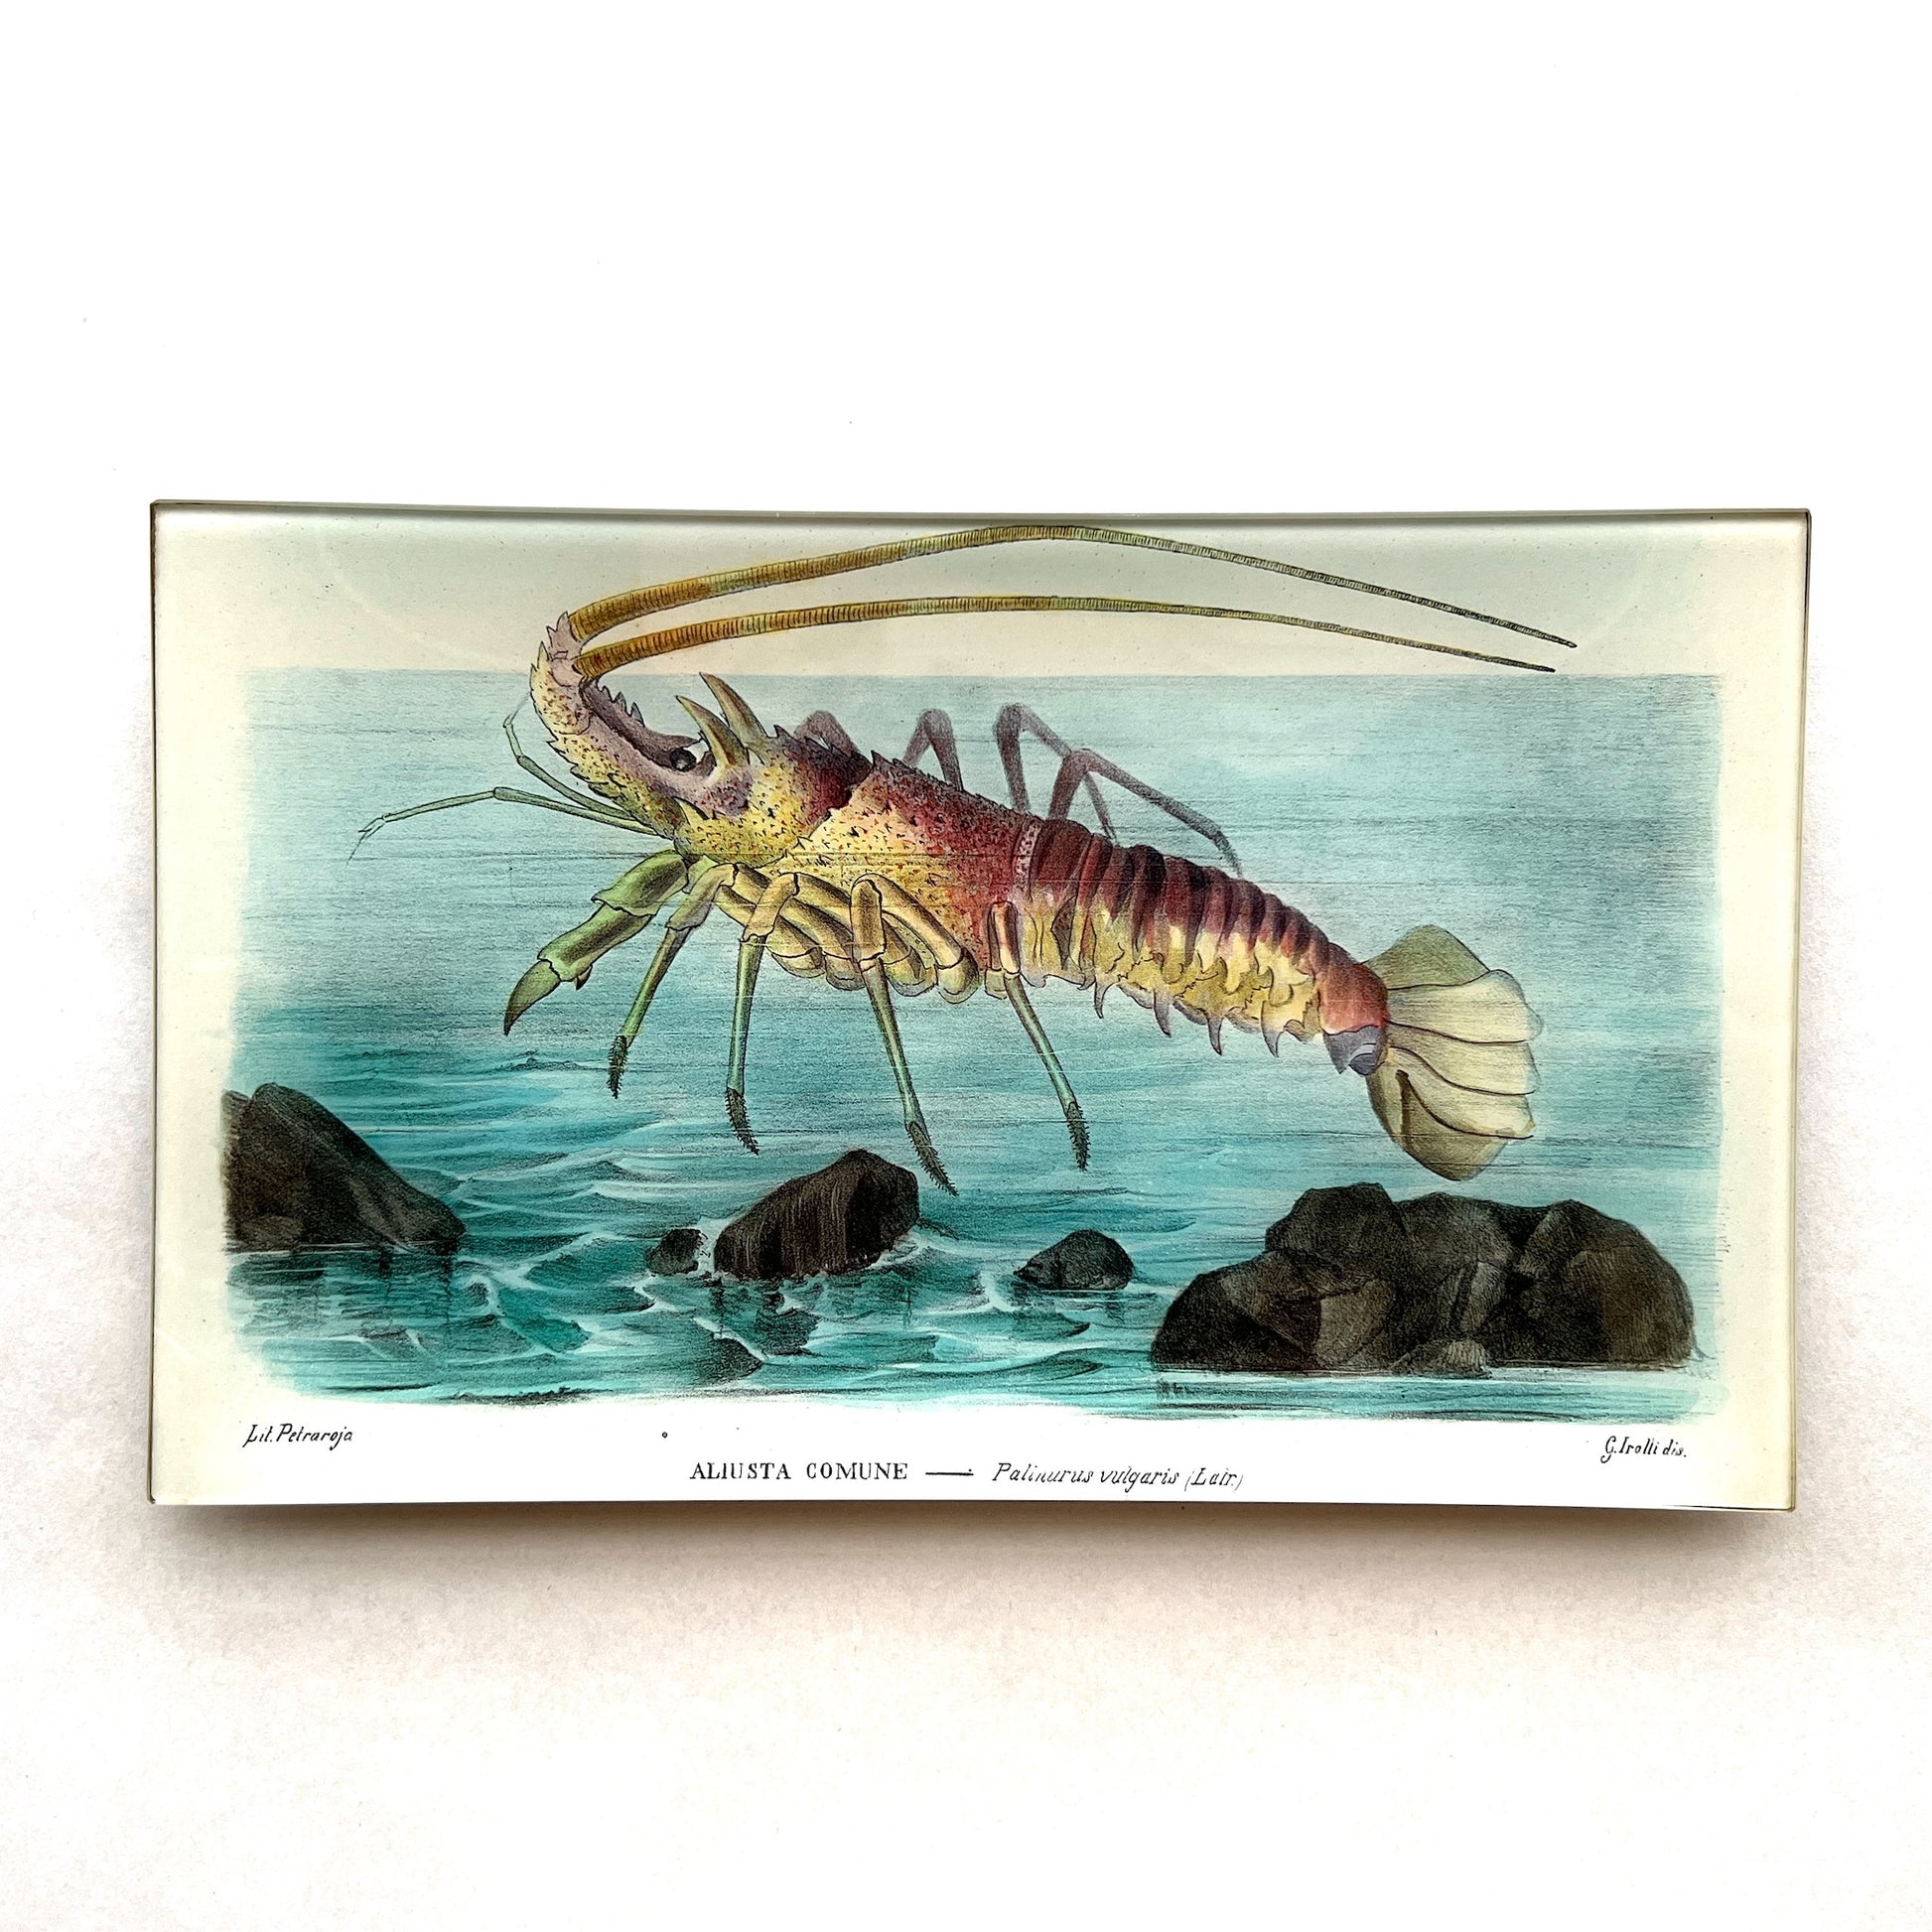 【JOHN DERIAN】デコパージュプレート Lobster